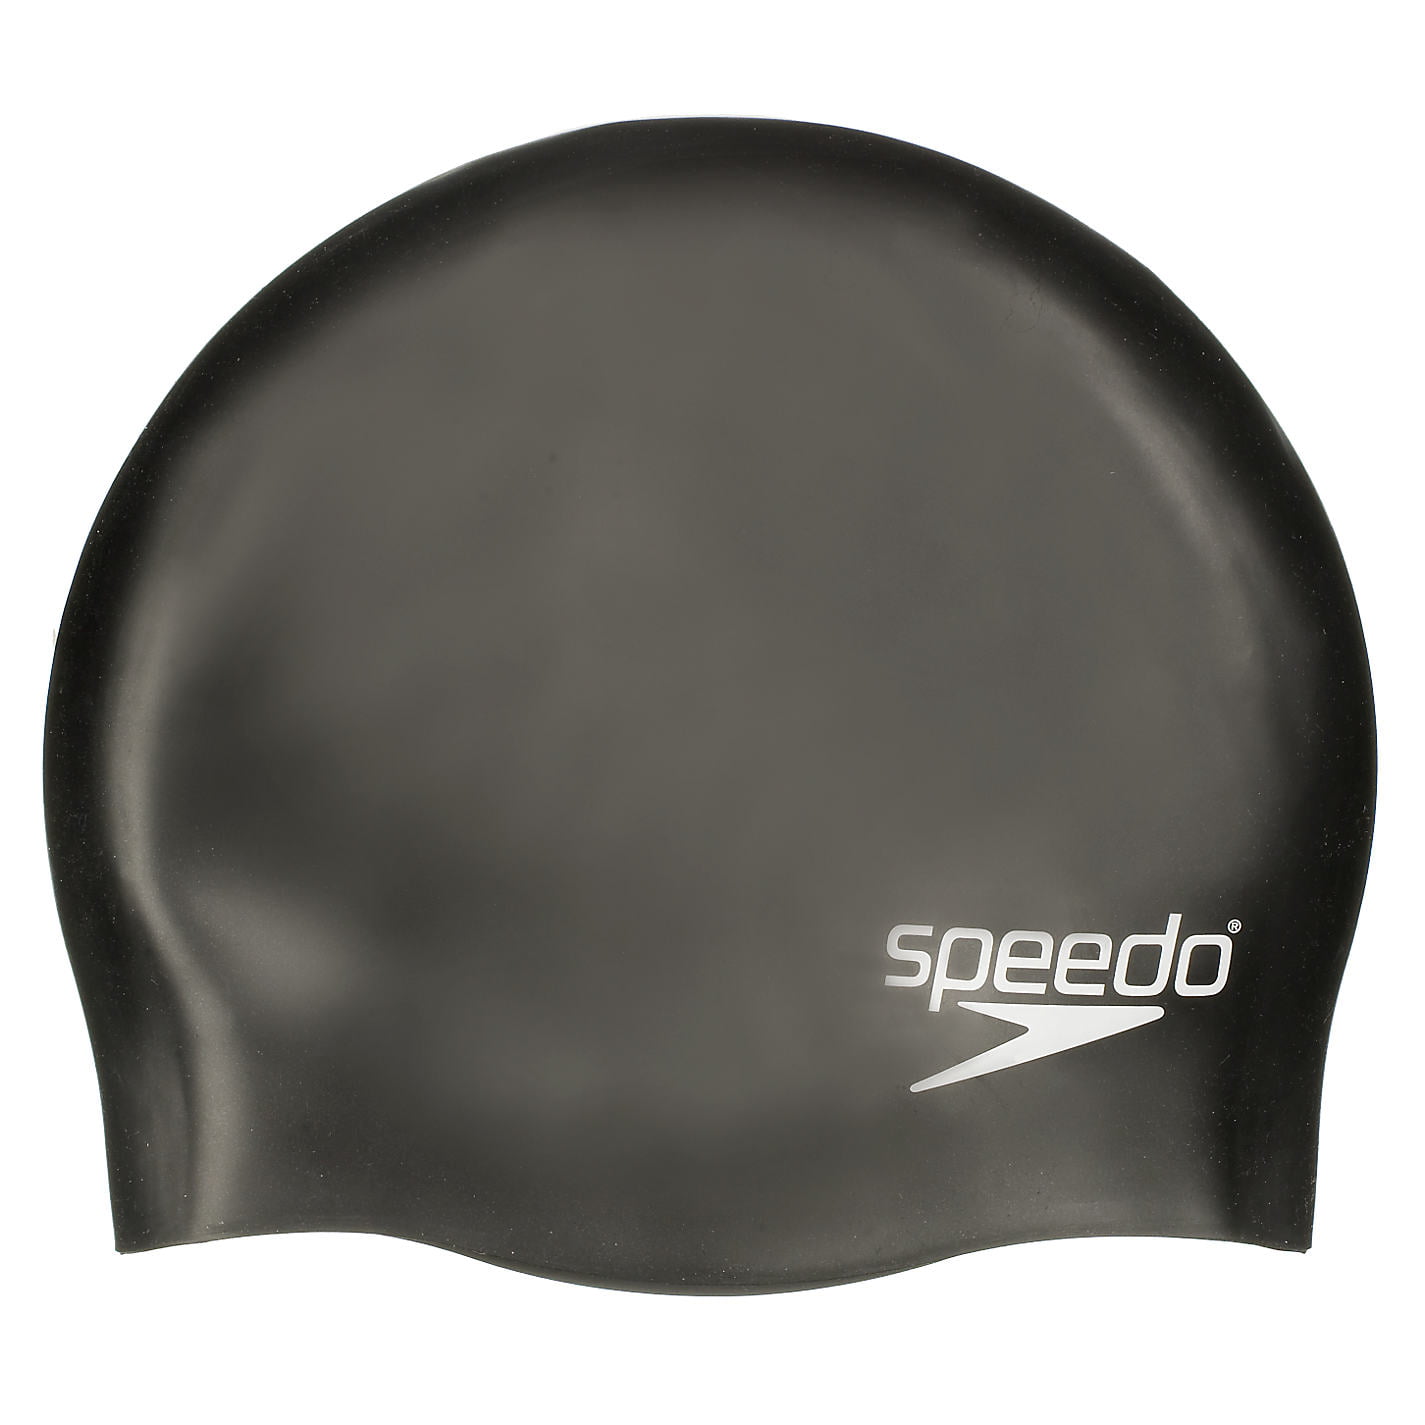 Speedo Silicone Flag Swim Cap USA Black for sale online 